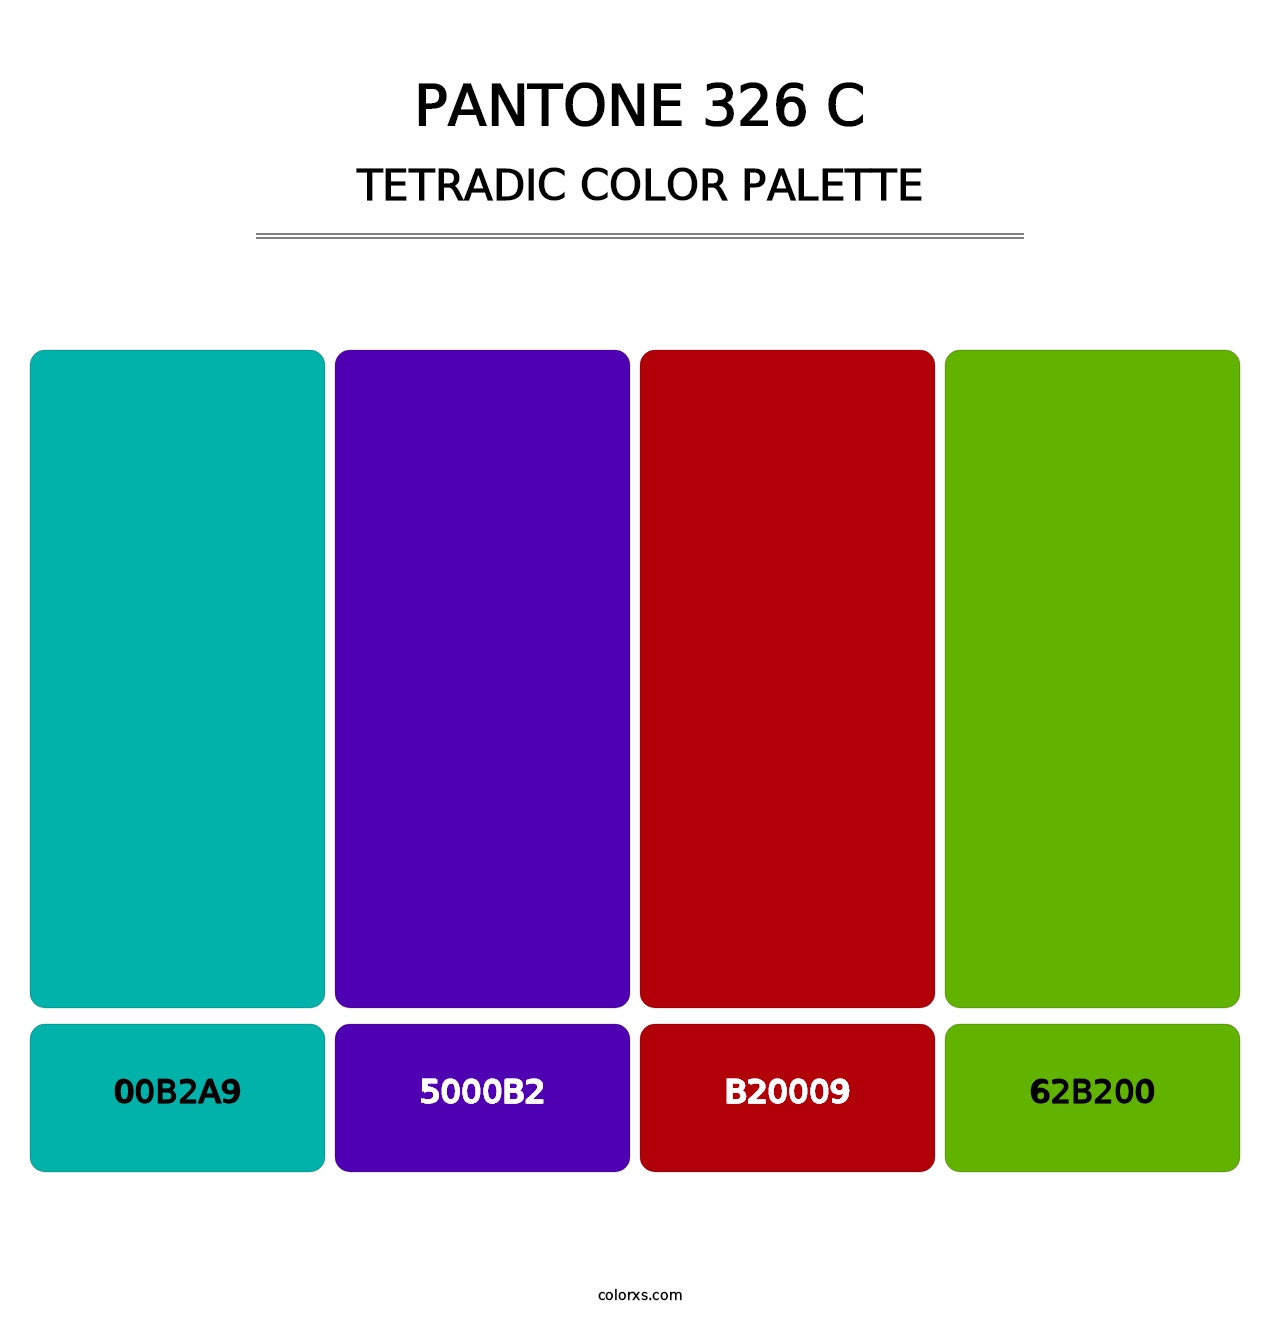 PANTONE 326 C - Tetradic Color Palette